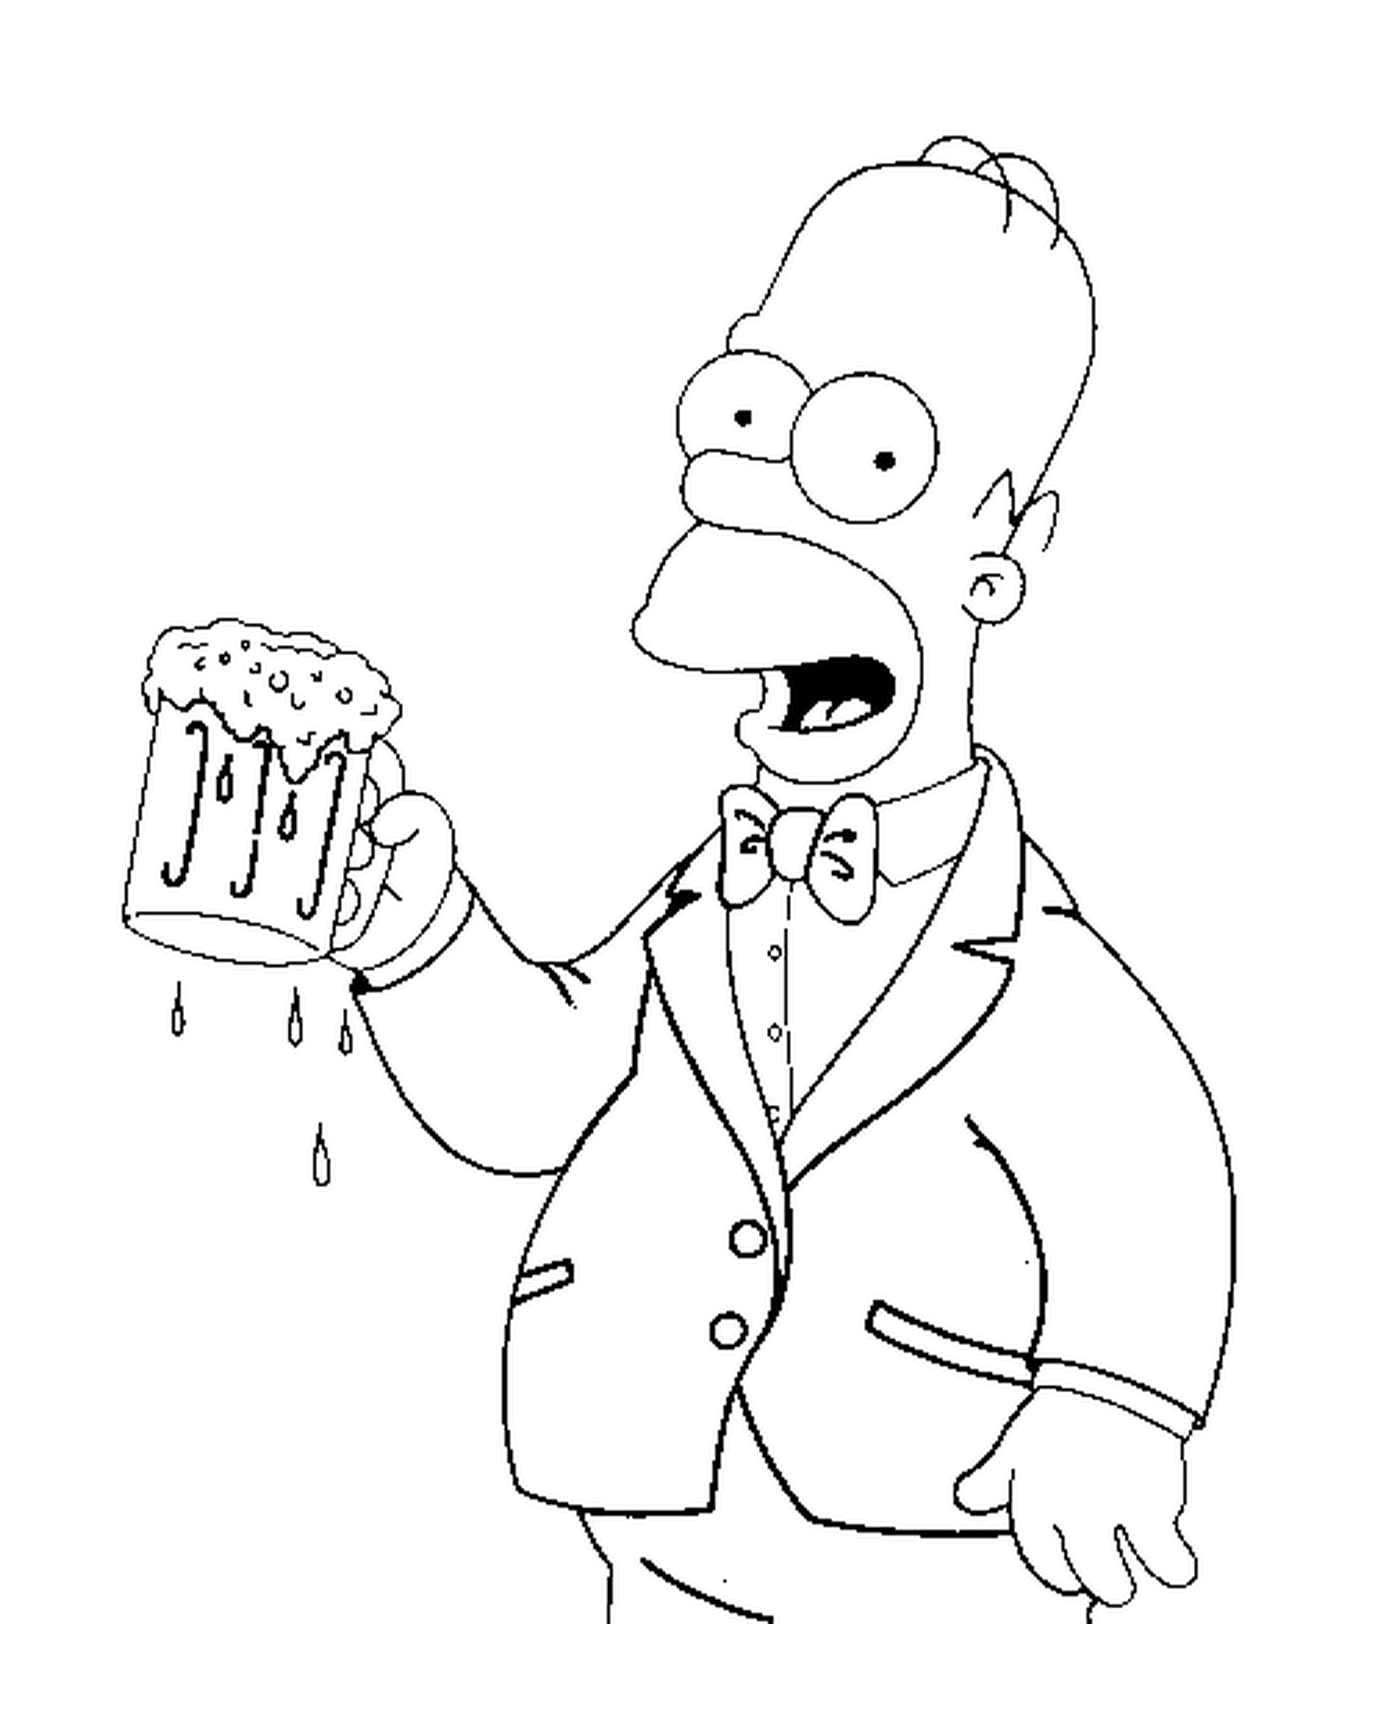  Homer ha una birra fresca 